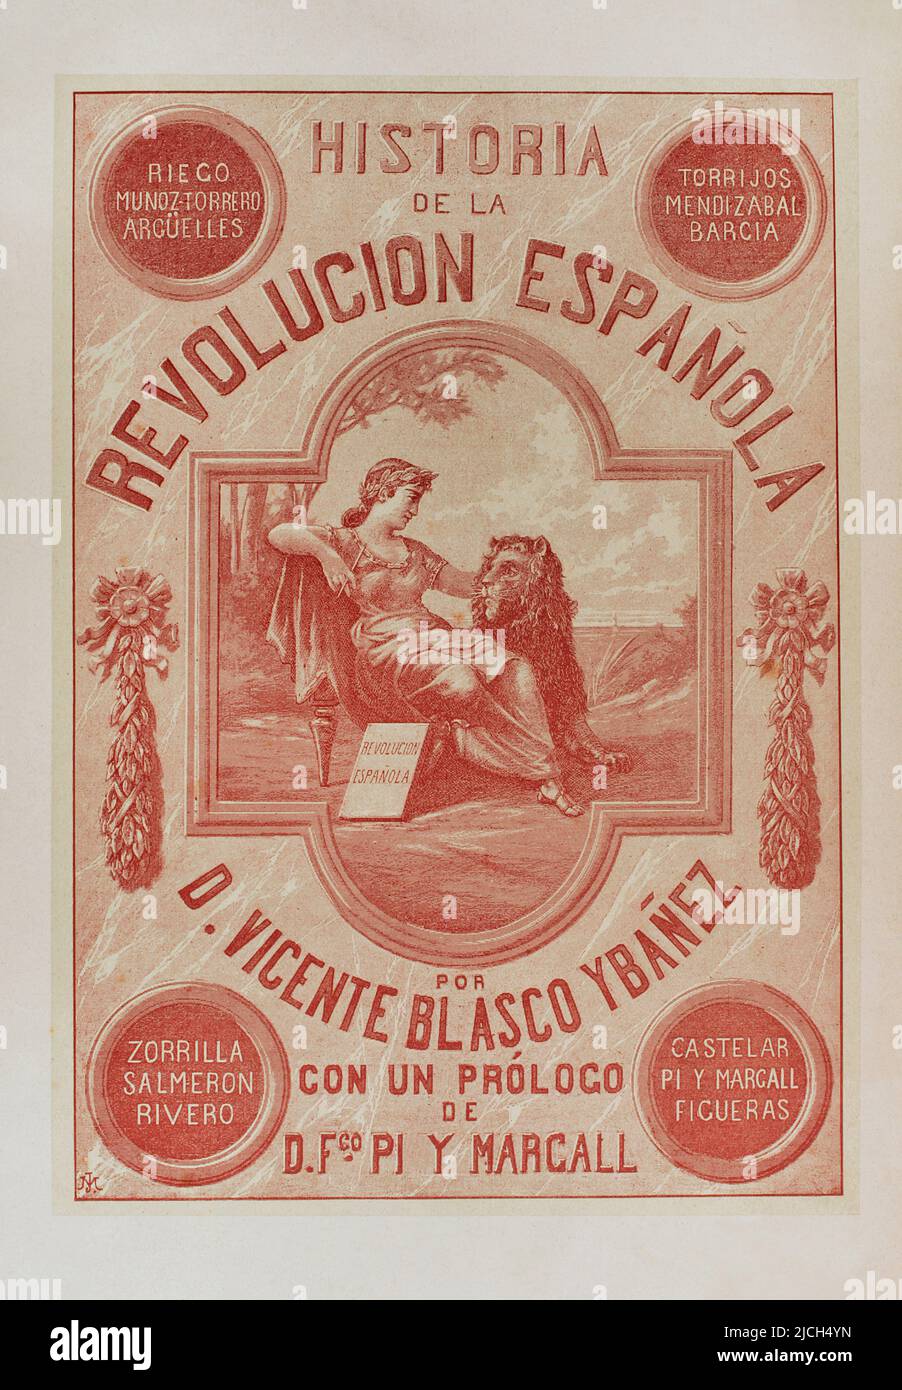 'Historia de la Revolución Española' (History of the Spanish Revolution, from from the Peninsular War to the Restoration in Sagunto), by Vicente Blasco Ibáñez. Volume I. Published in Barcelona, 1890. Stock Photo